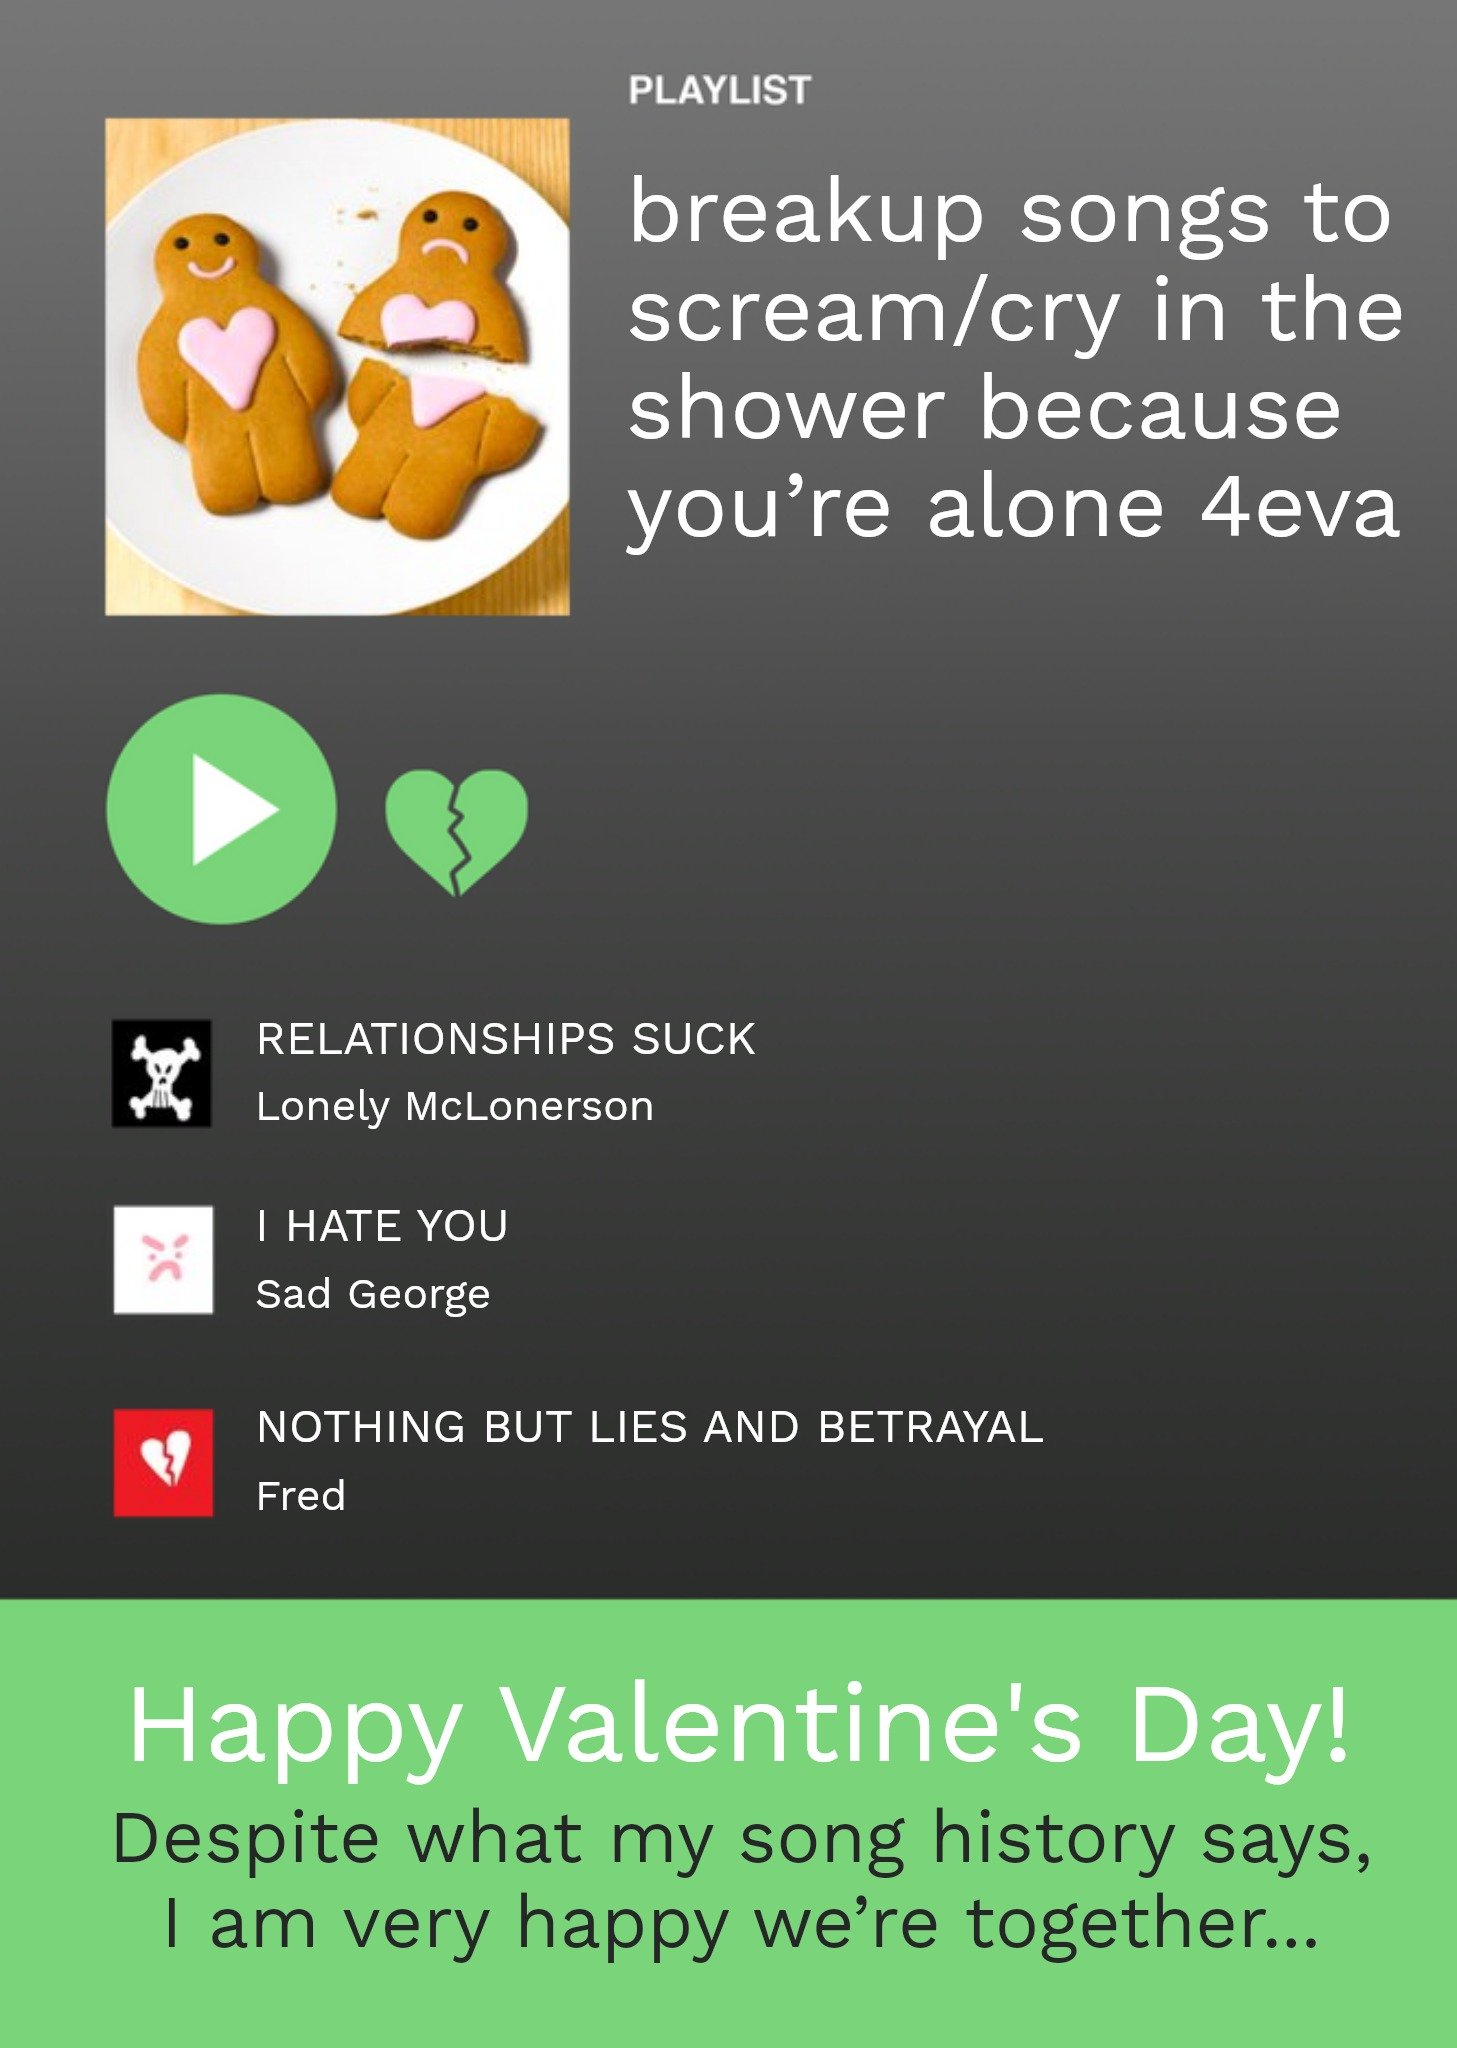 Moonpig Music Themed Funny Spoof Playlist Photo Upload Valentine's Card Ecard